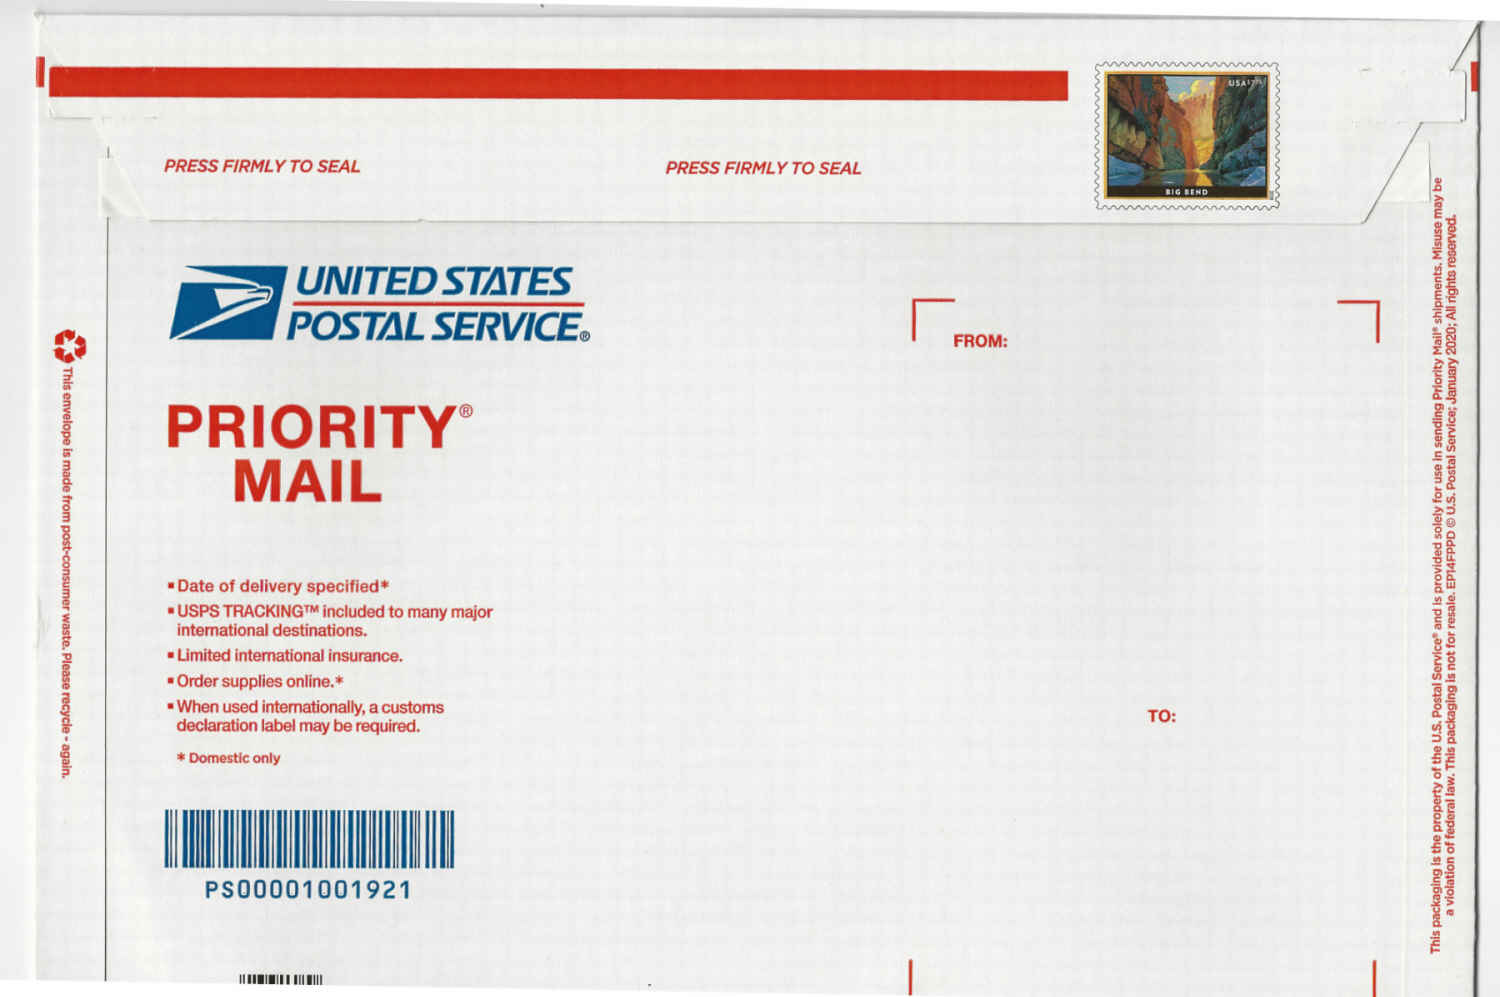 mail stationery 3.1